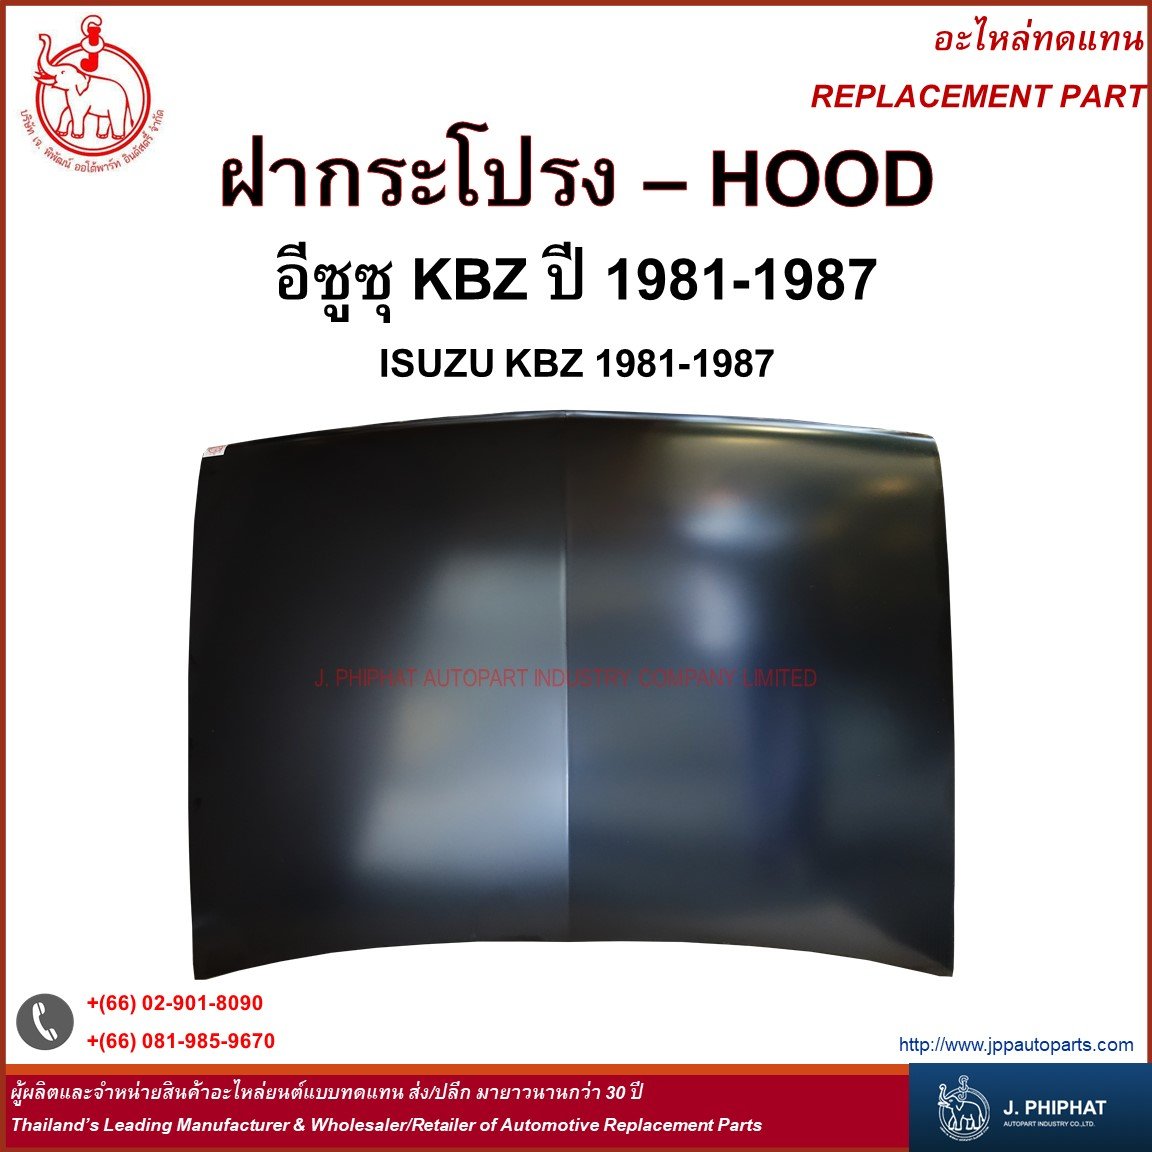 Hood - Isuzu KBZ '81-87